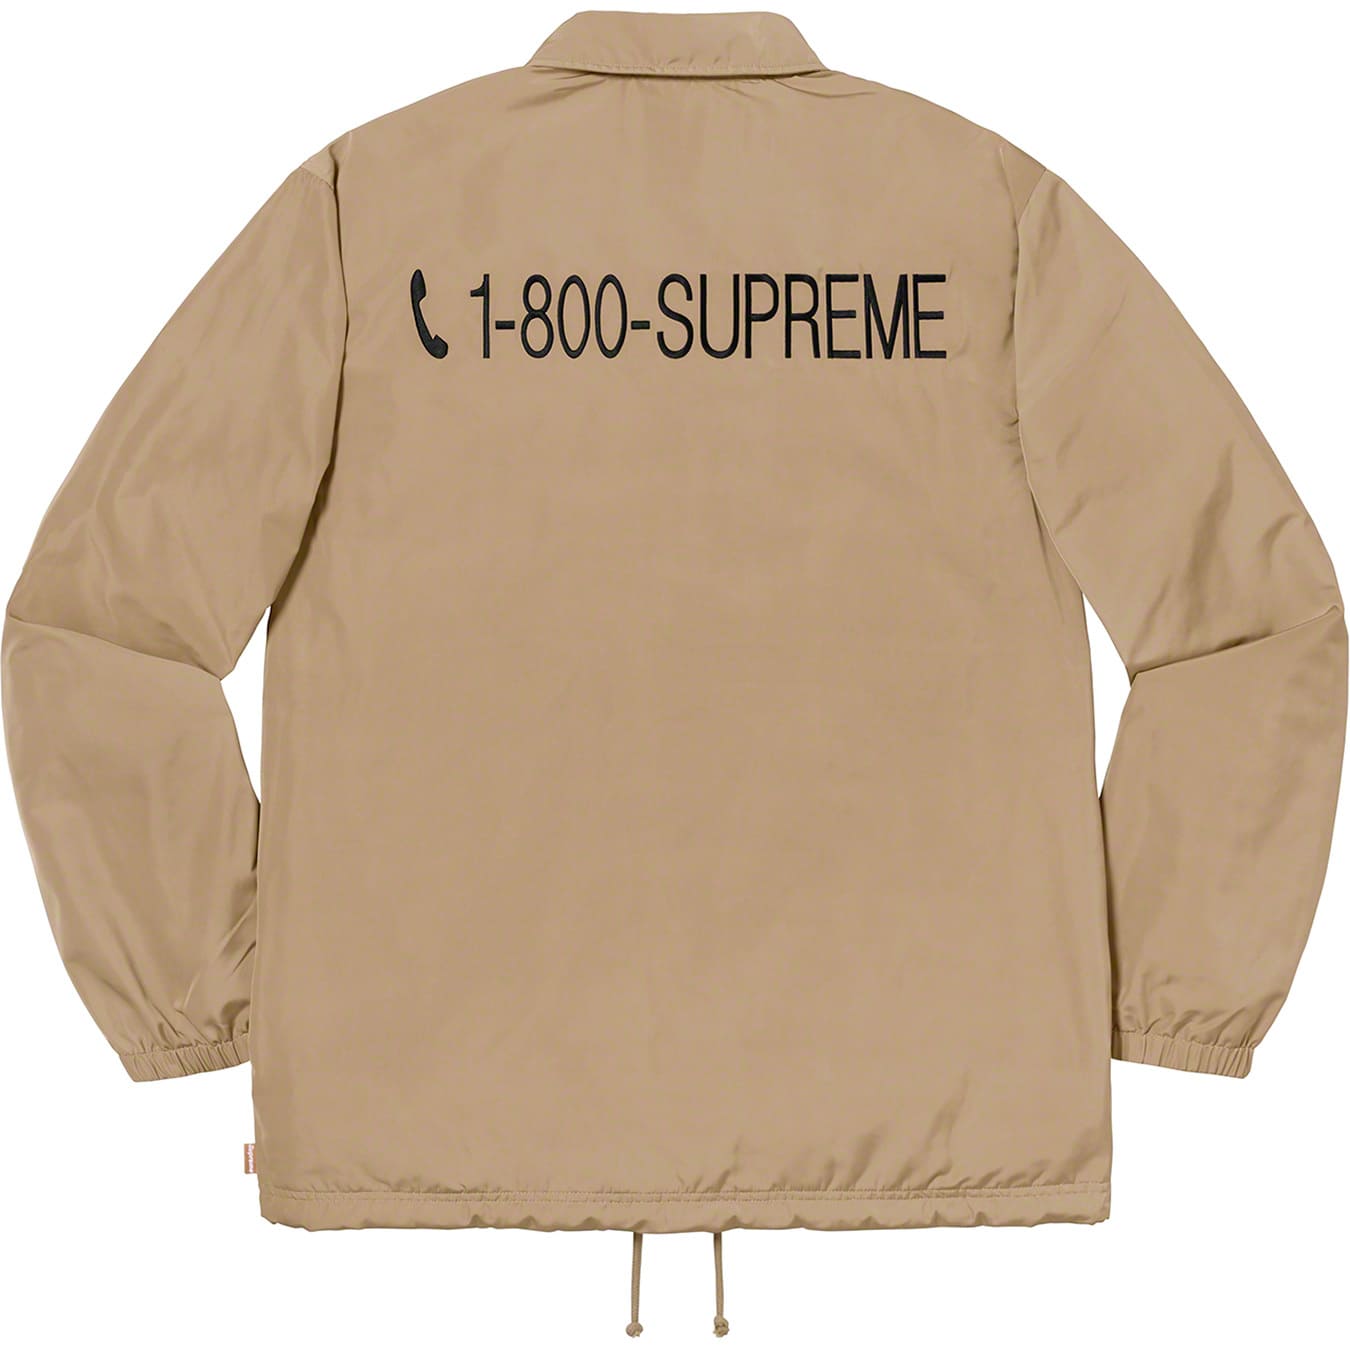 Supreme 1-800 Coaches Jacket